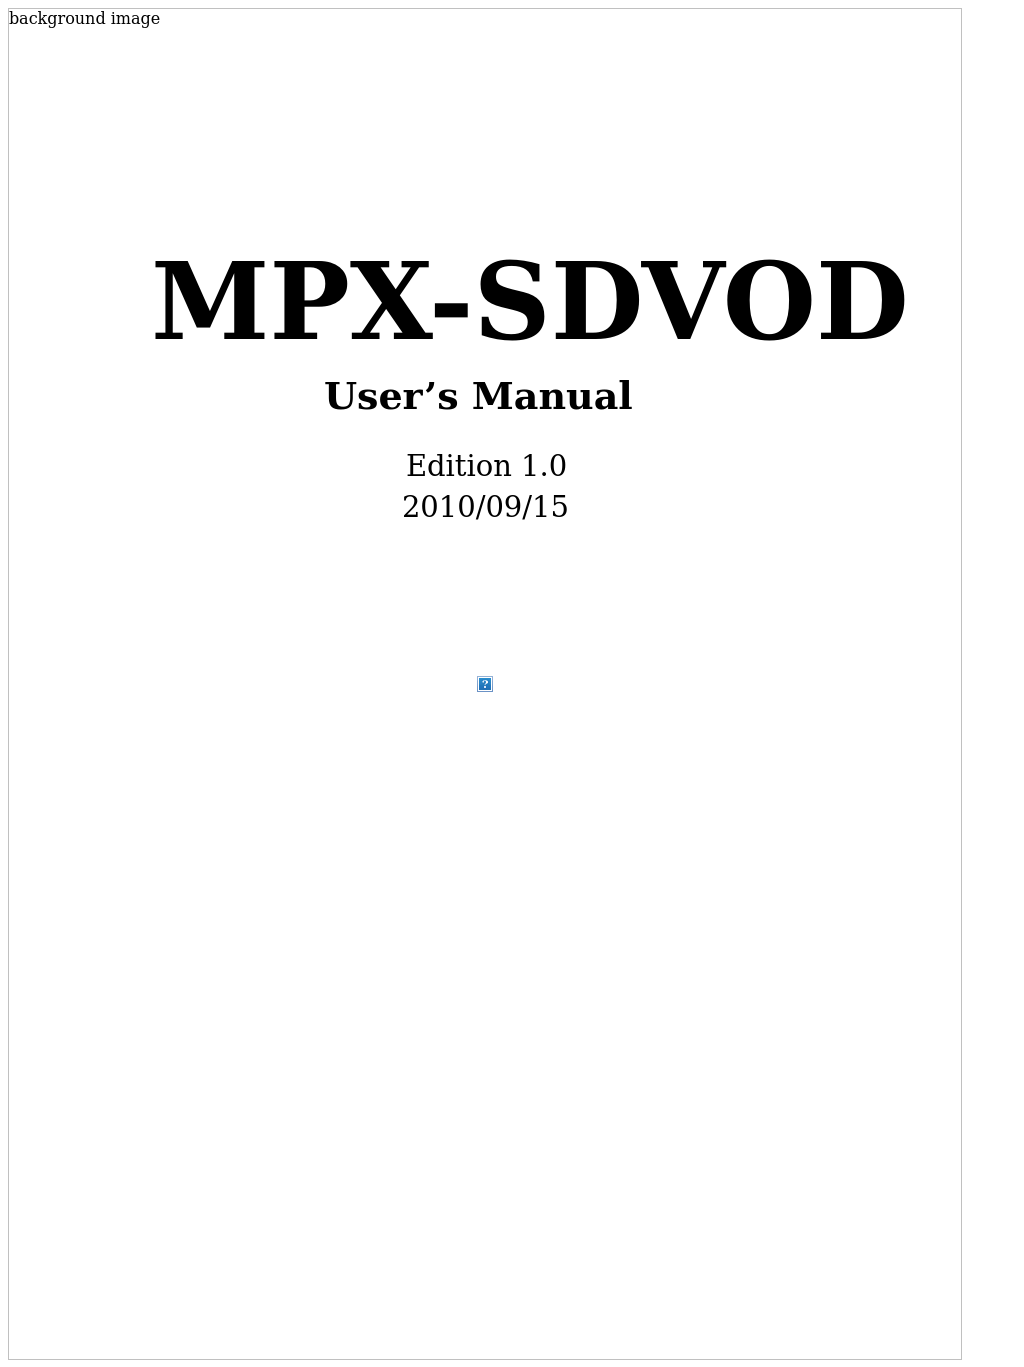 MPX-SDVOD